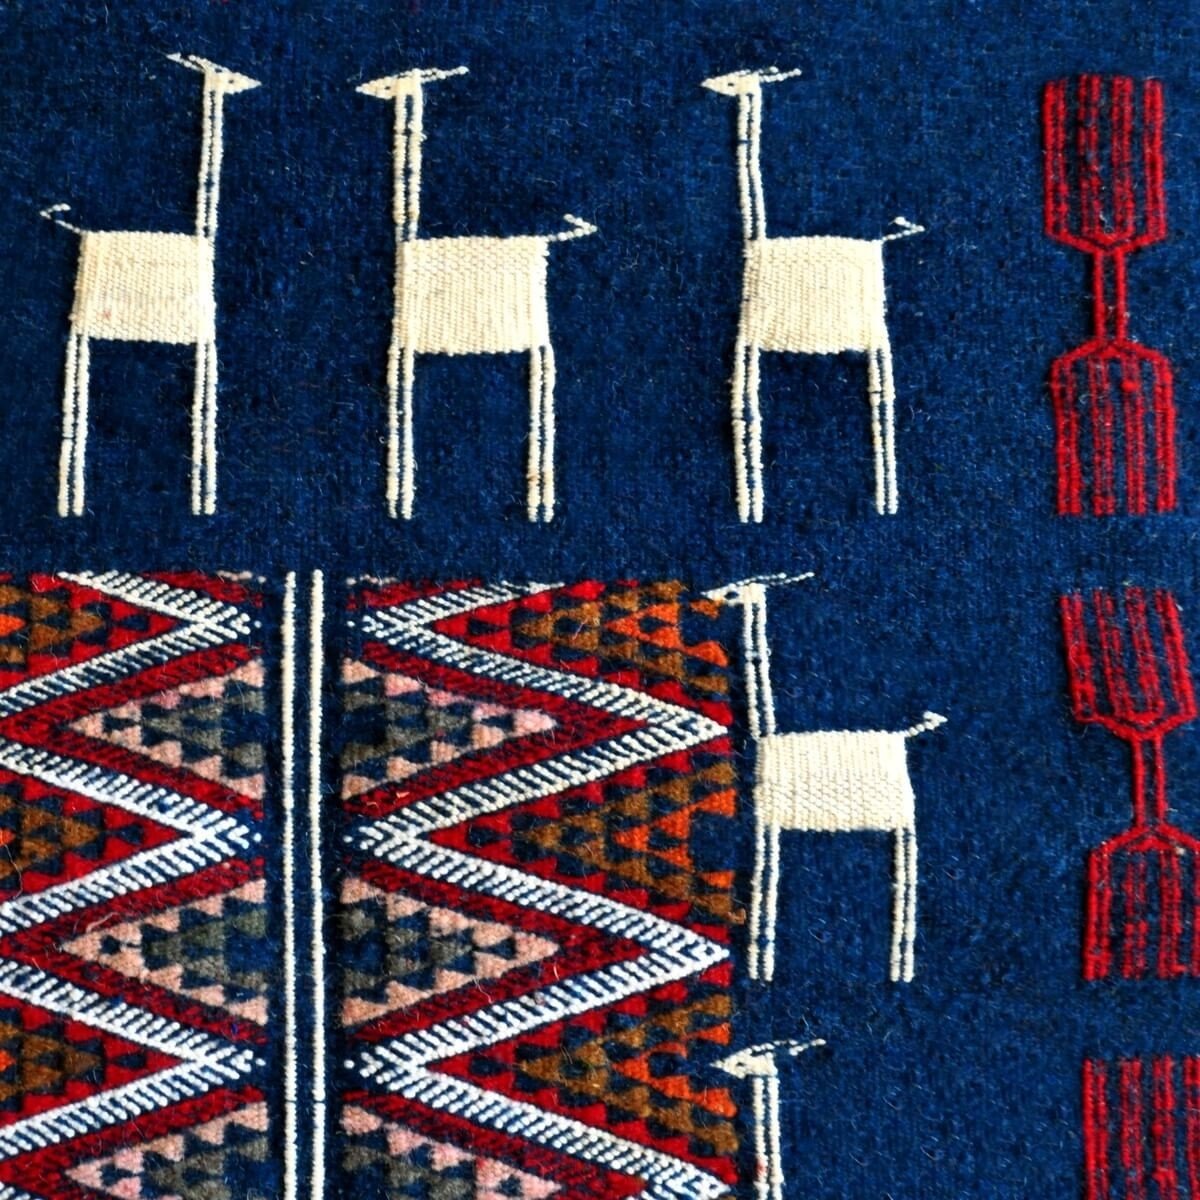 Berber carpet Rug Kilim Ichbilia 60x115 Blue/White/Red (Handmade, Wool) Tunisian Rug Kilim style Moroccan rug. Rectangular carpe